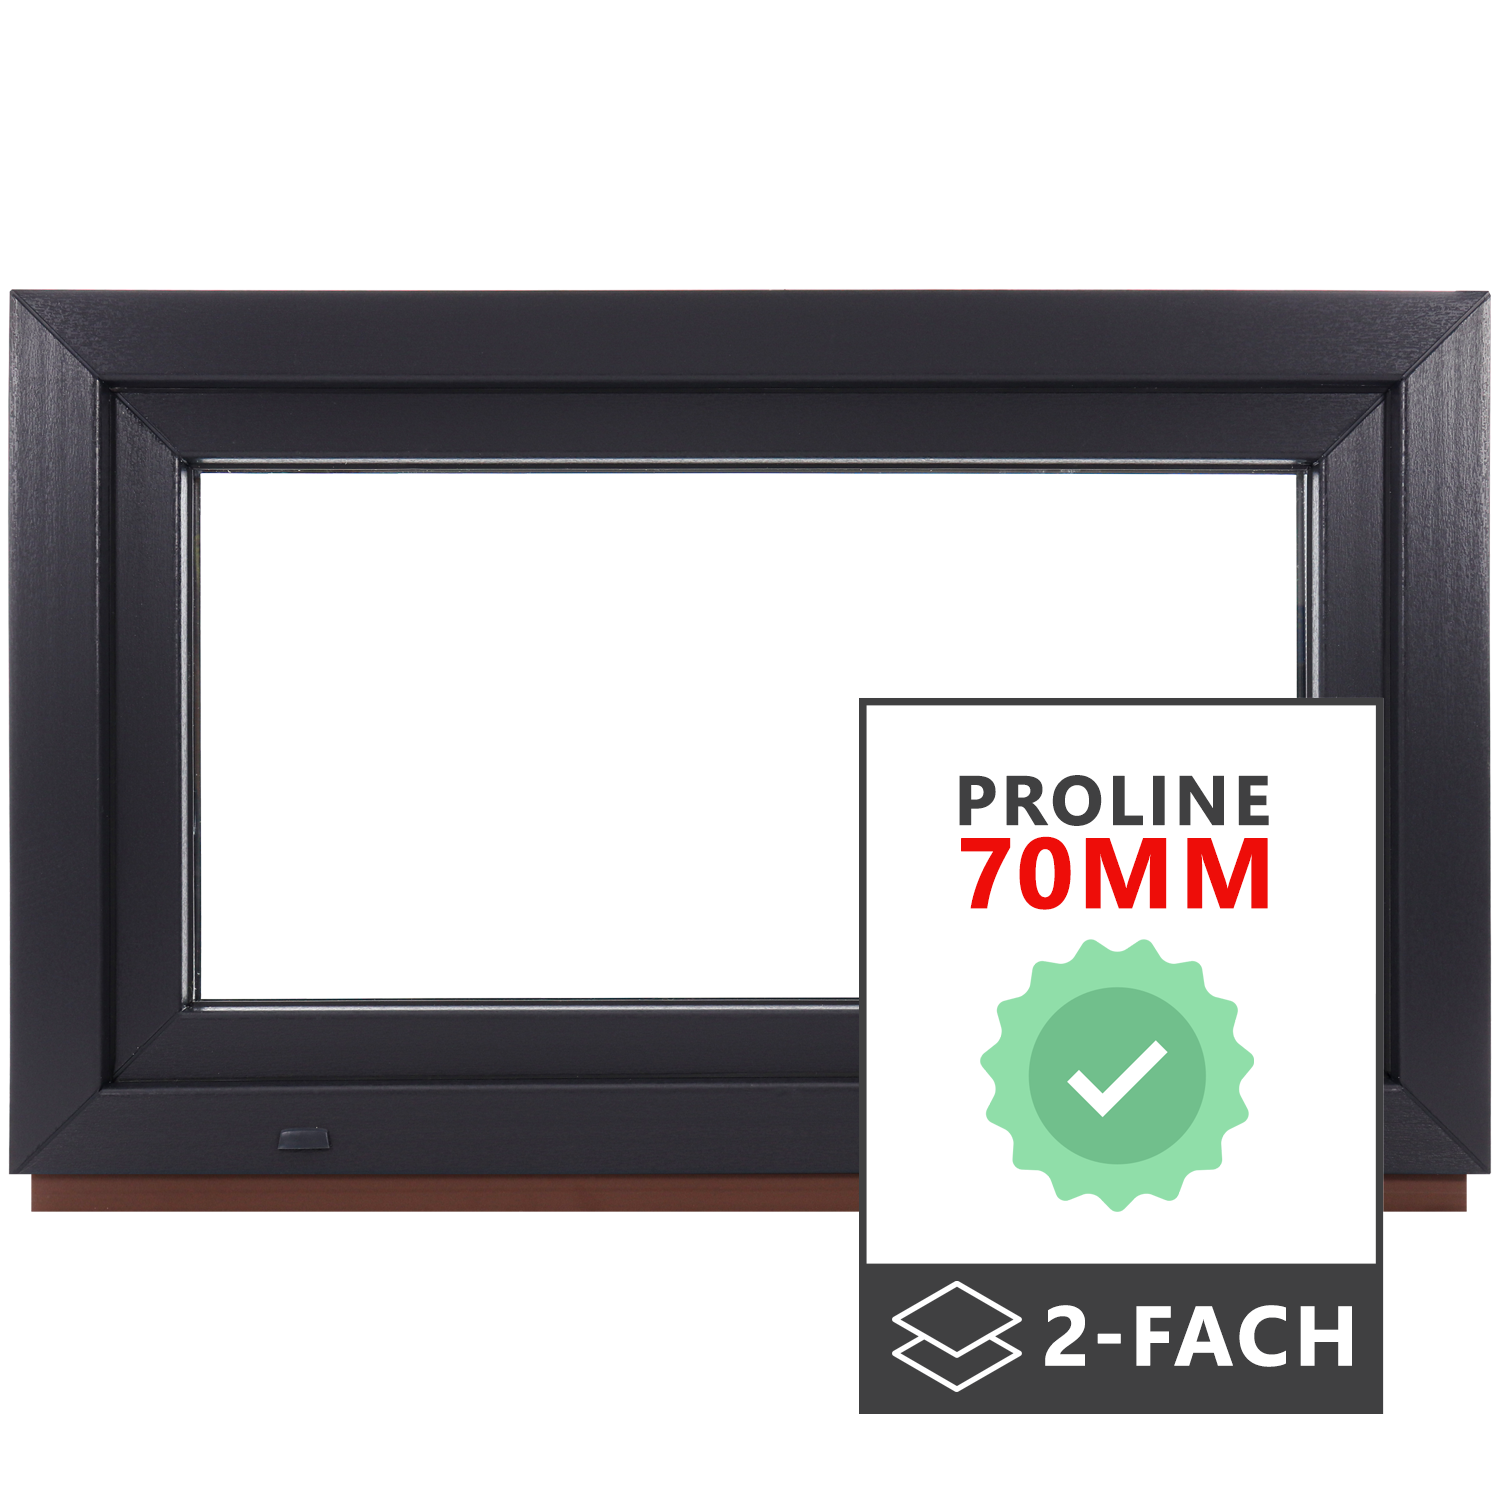 P24® Kellerfenster Kunststofffenster 2-Fach 70mm Proline, Anthrazit